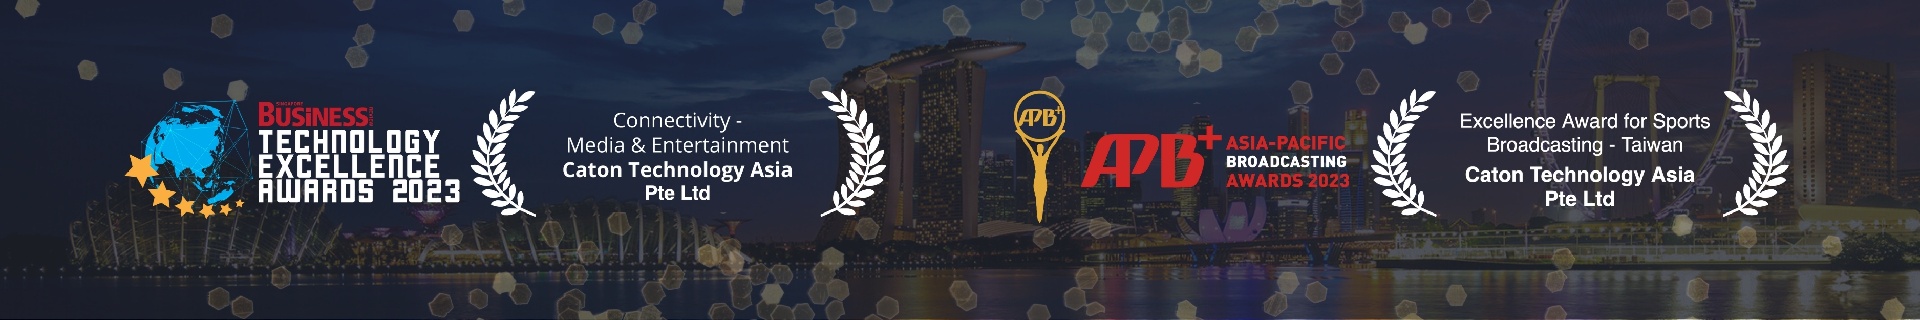 SBR and APB Awards 2023 - Landing Page Banner 2